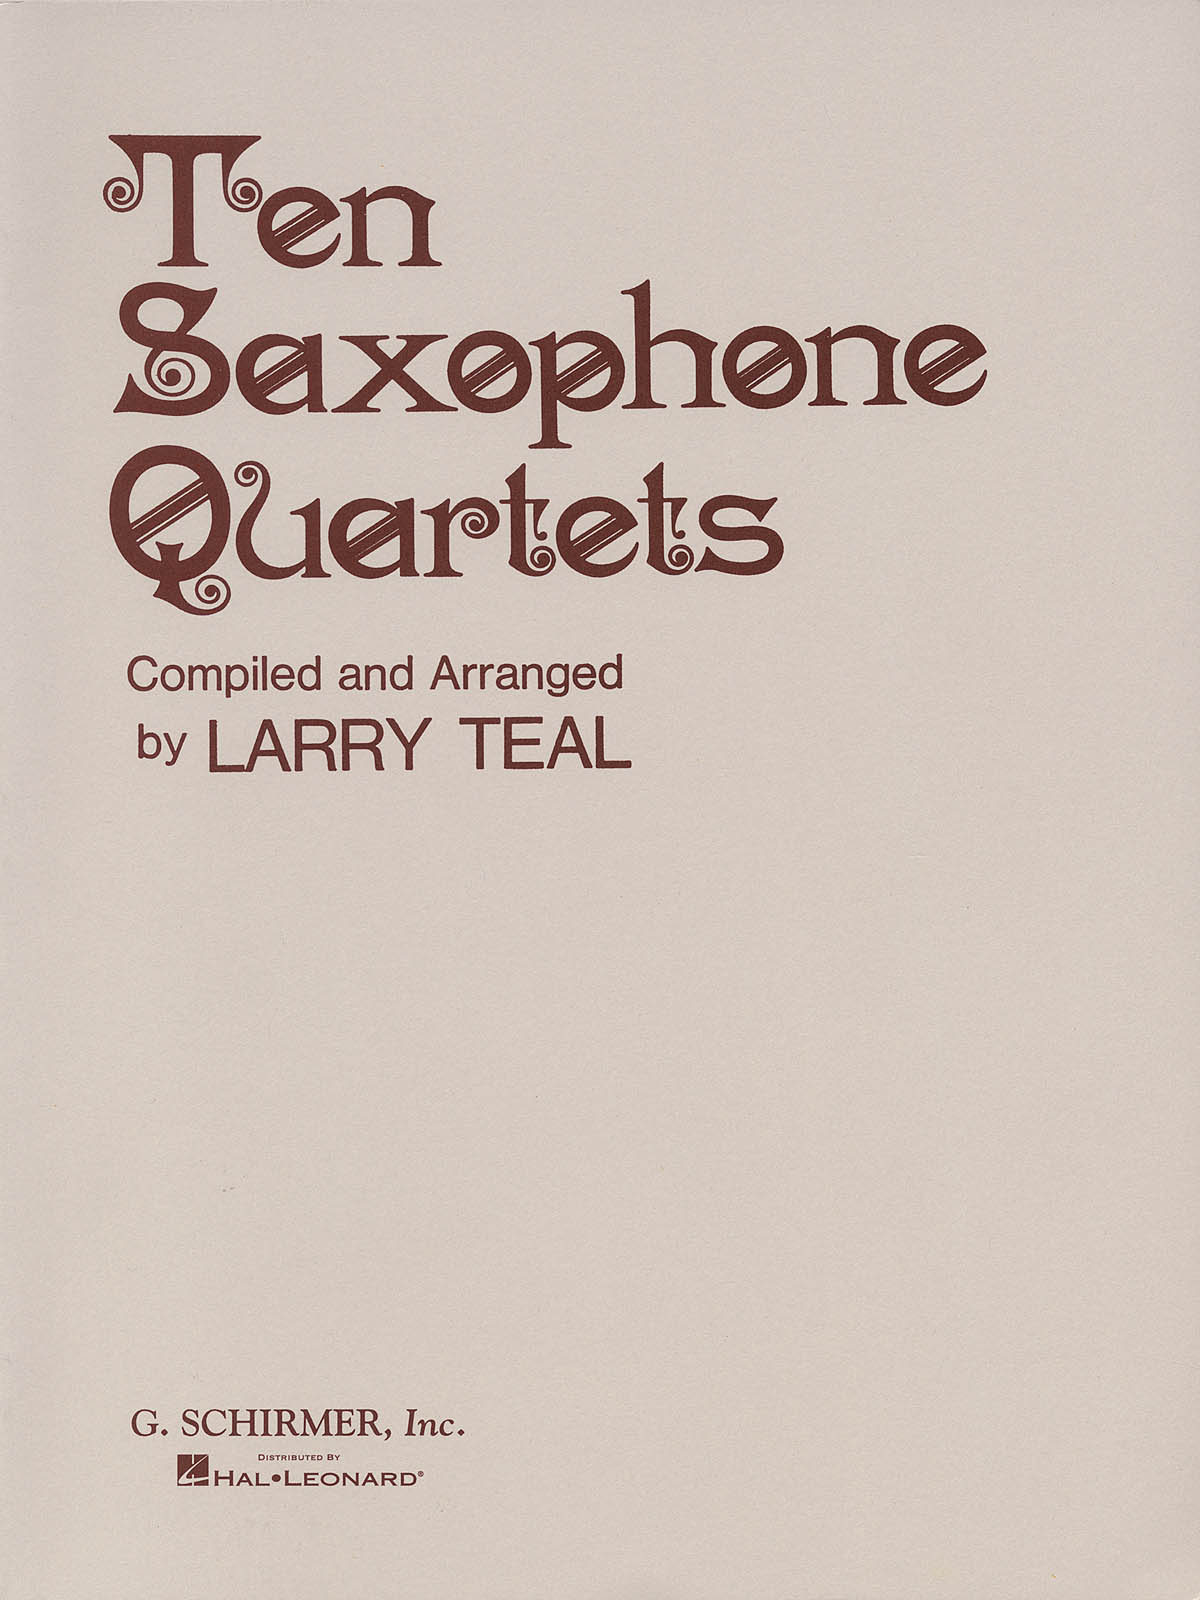 Ten Saxophone Quartets